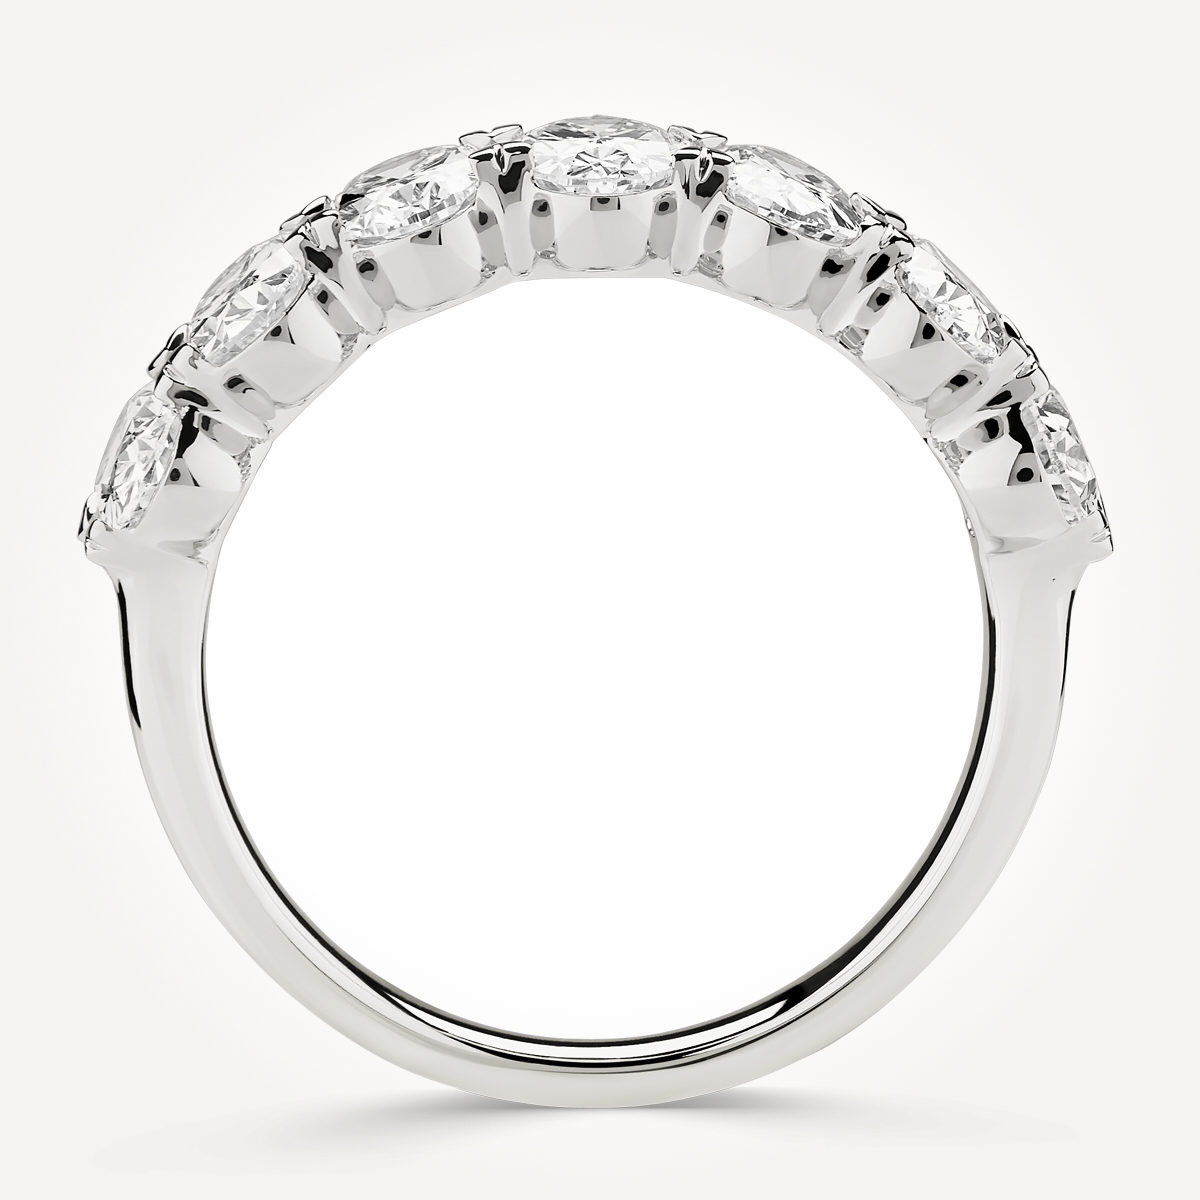 14KT White Gold 7 Stone Oval Diamond Ring